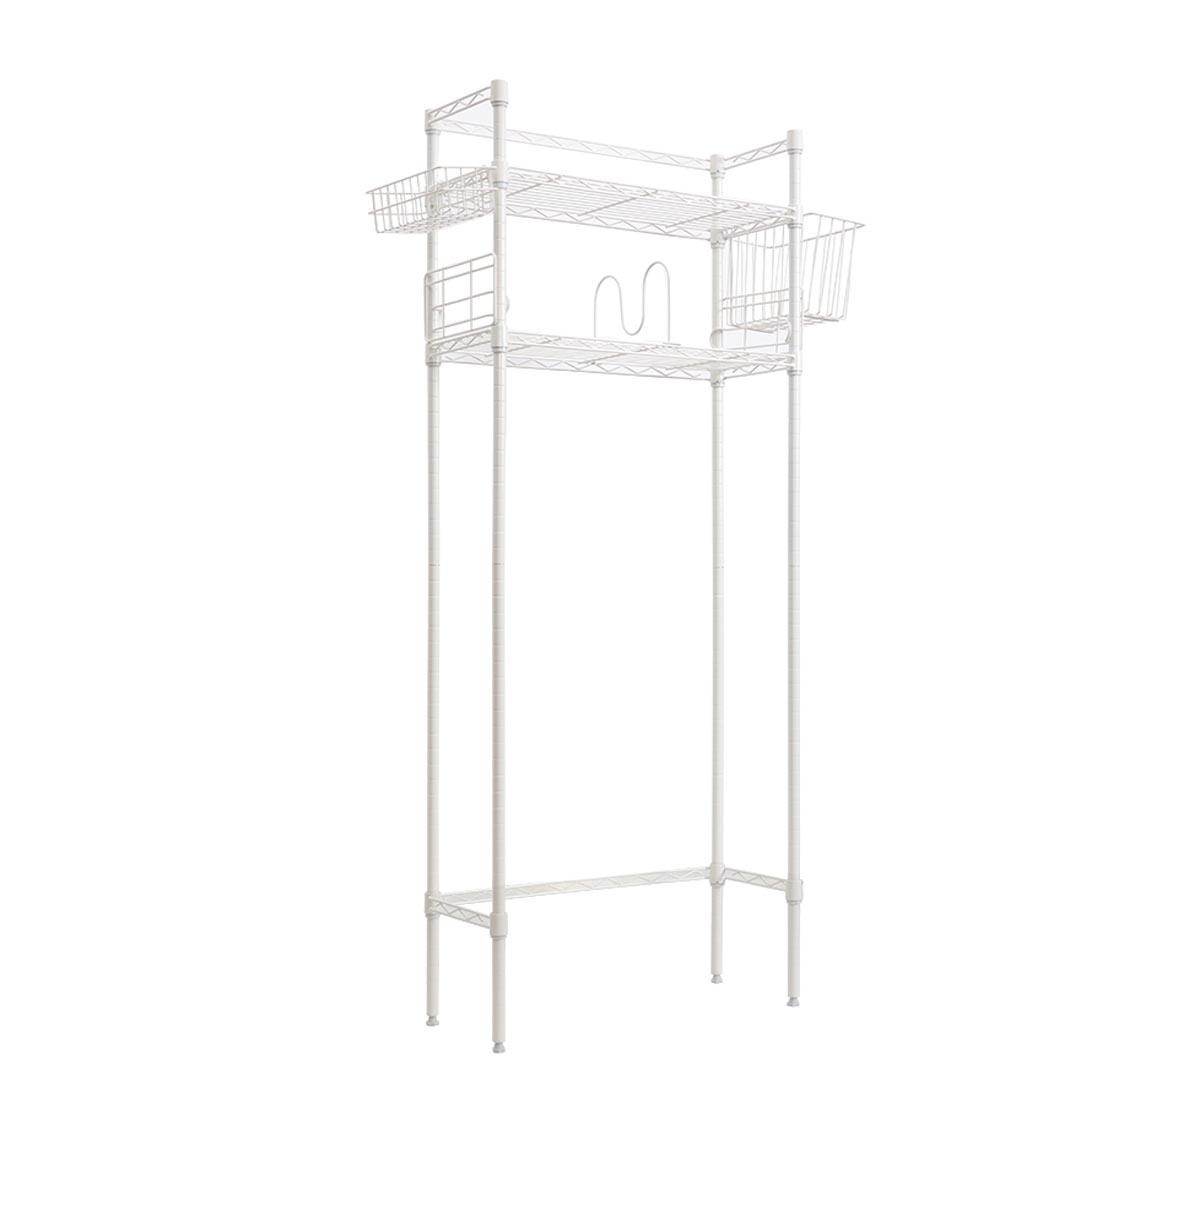 2-Tier Metal Bathroom Shelves Over Toilet / Metal Bathroom Shelves Freestanding / Chrome Metal Wire Bathroom Shelving